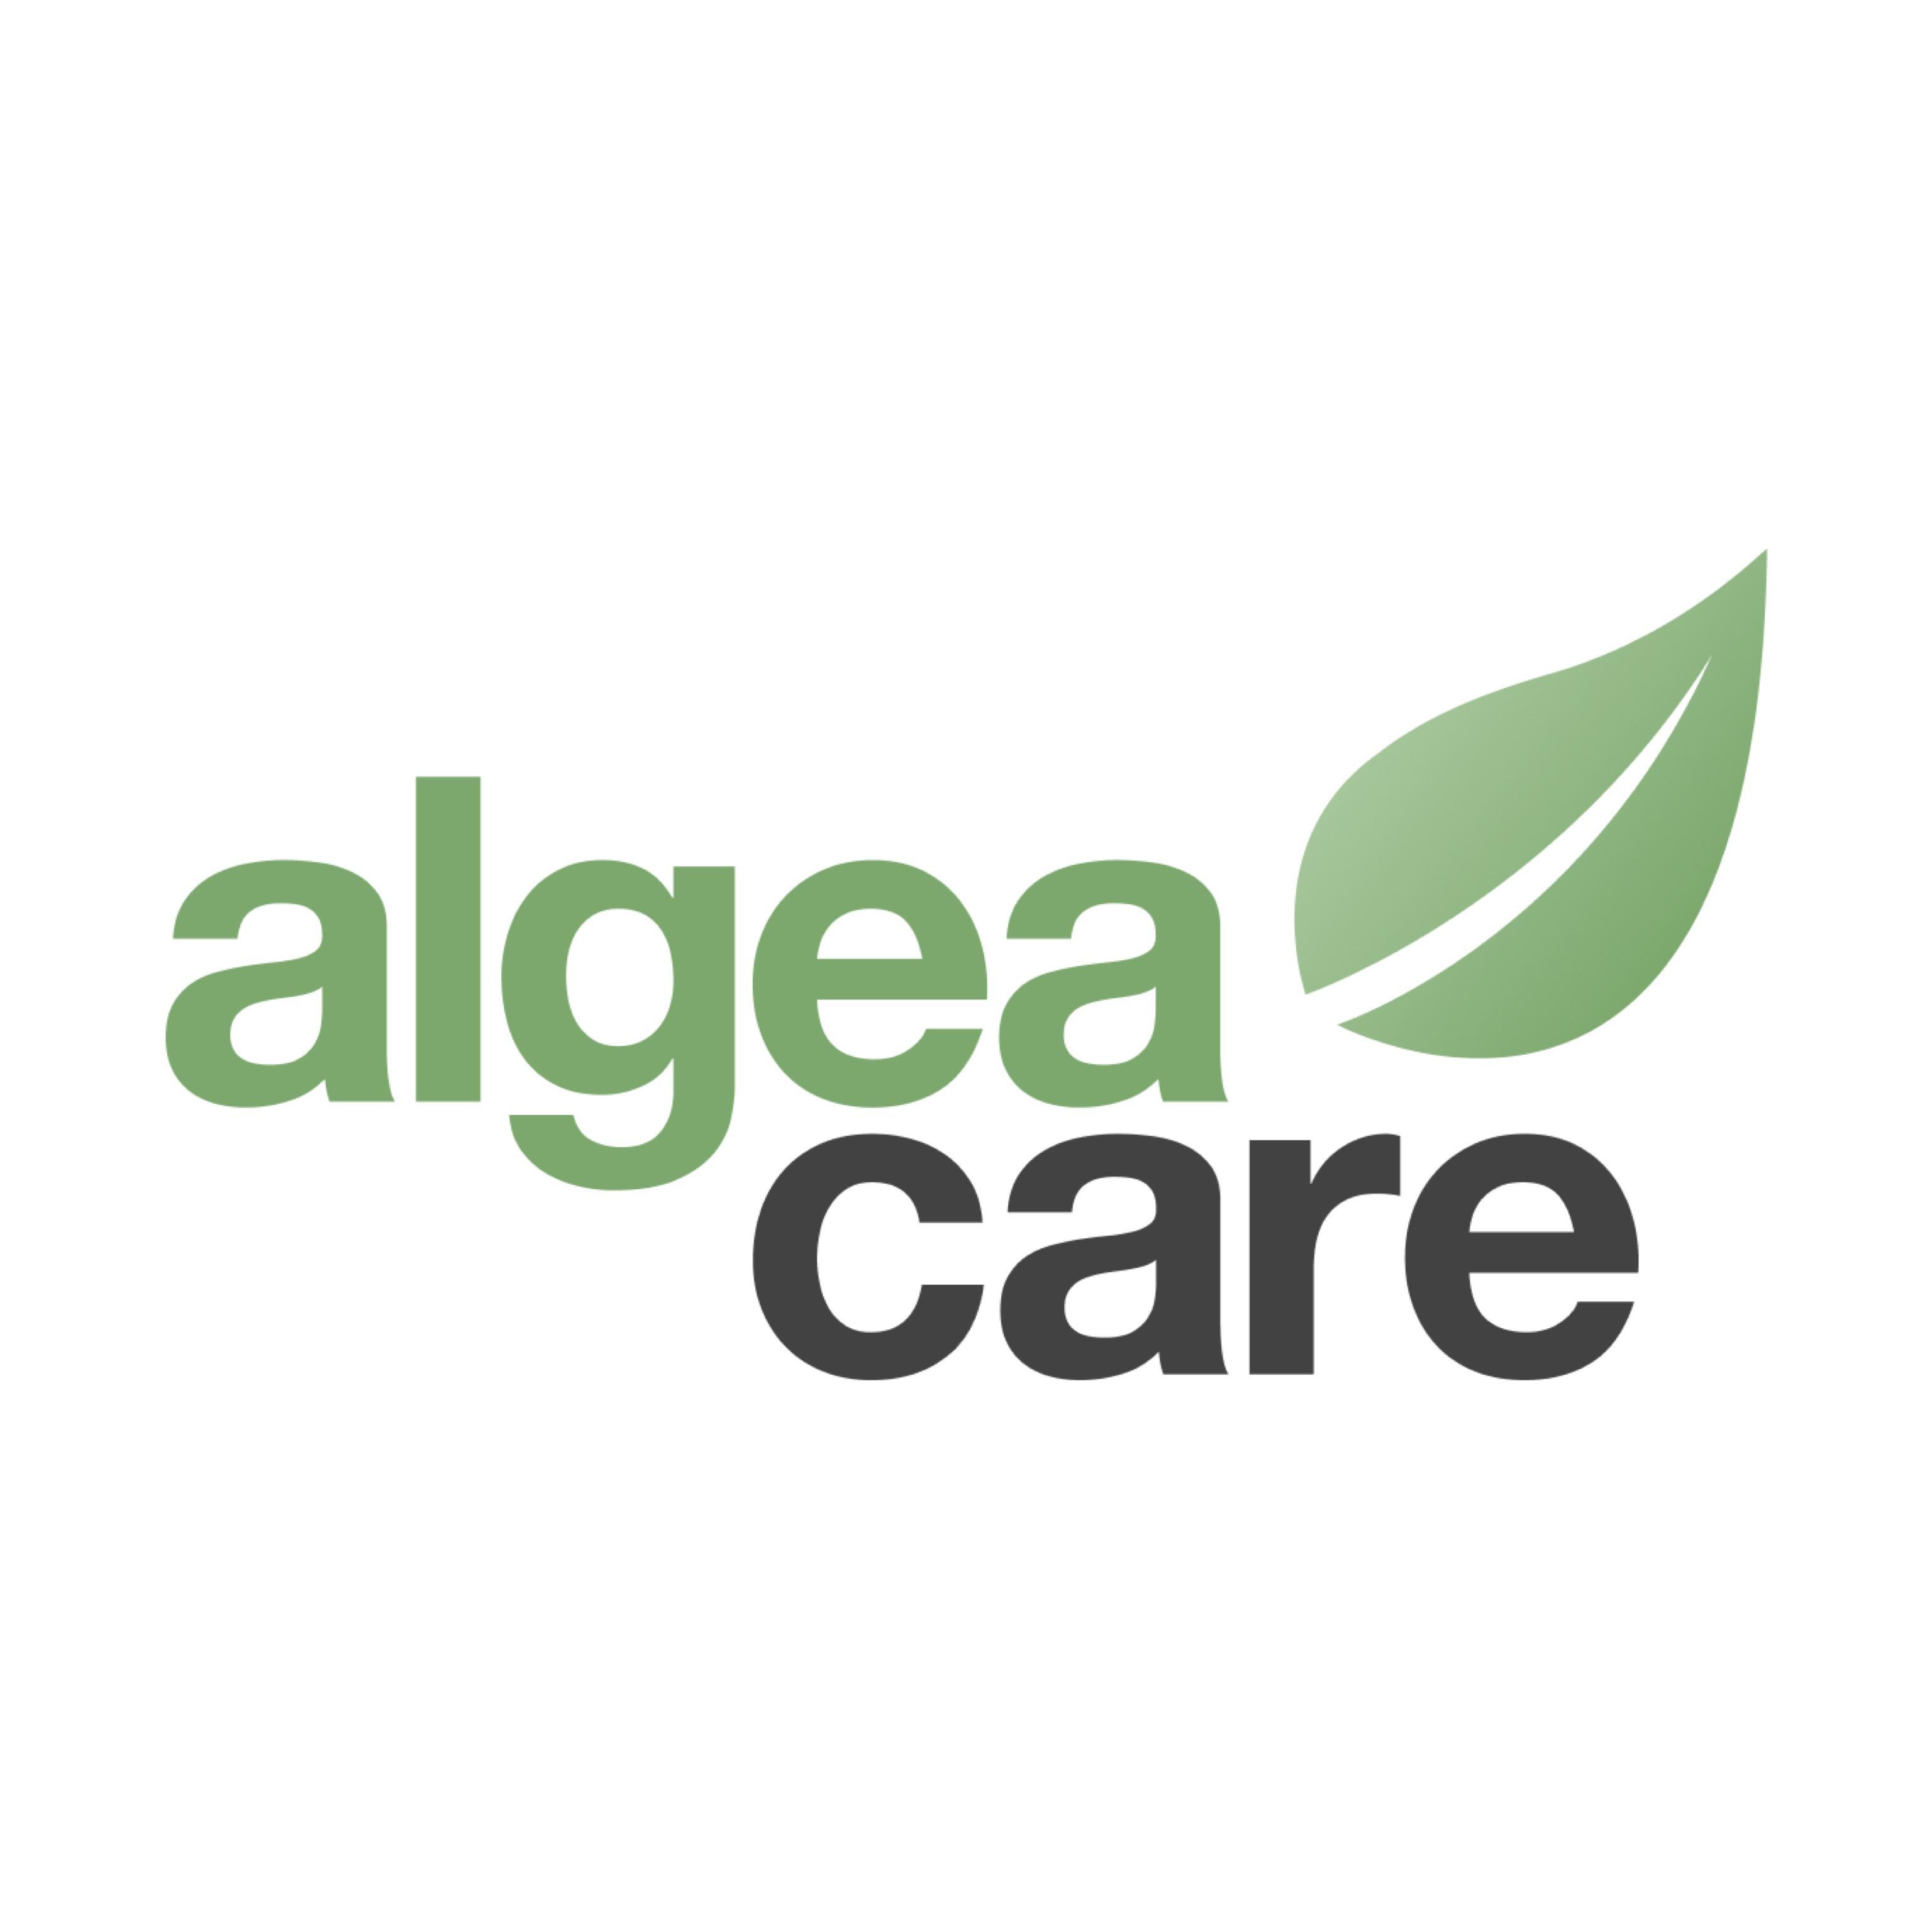 Algea Care Therapiezentrum Frankfurt in Frankfurt am Main - Logo